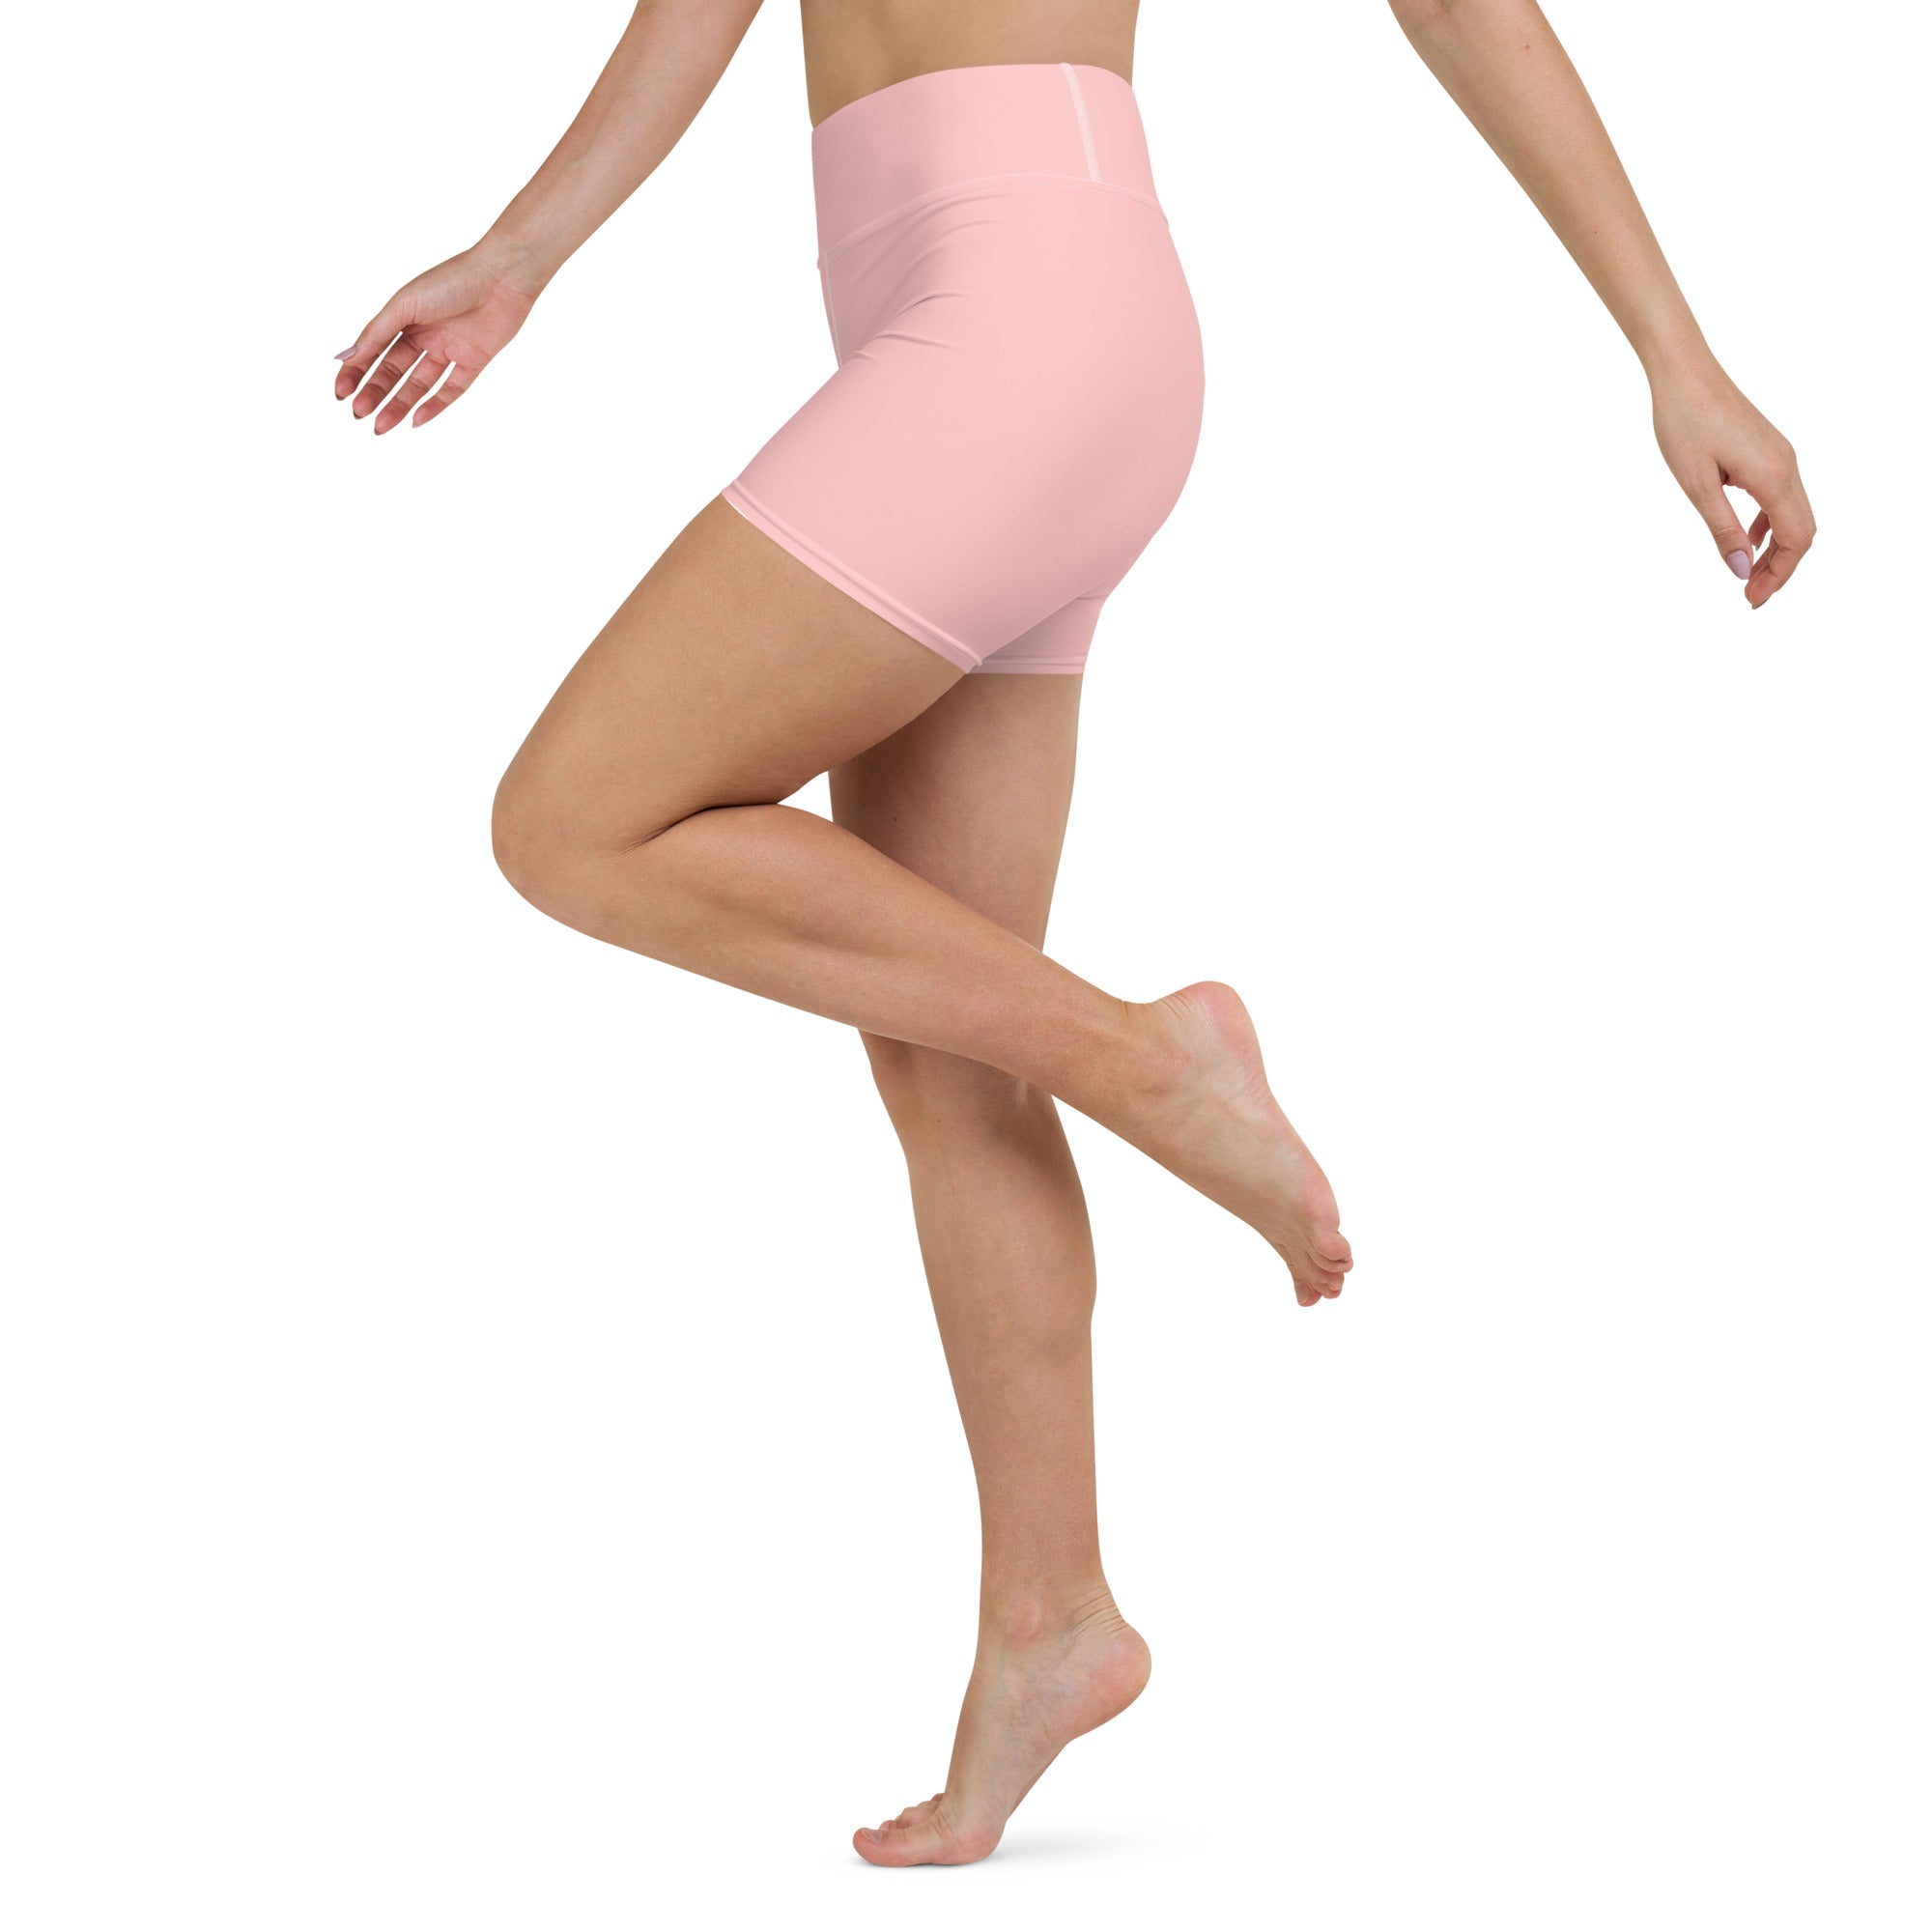 Lovable Cuties Pink Yoga Shorts